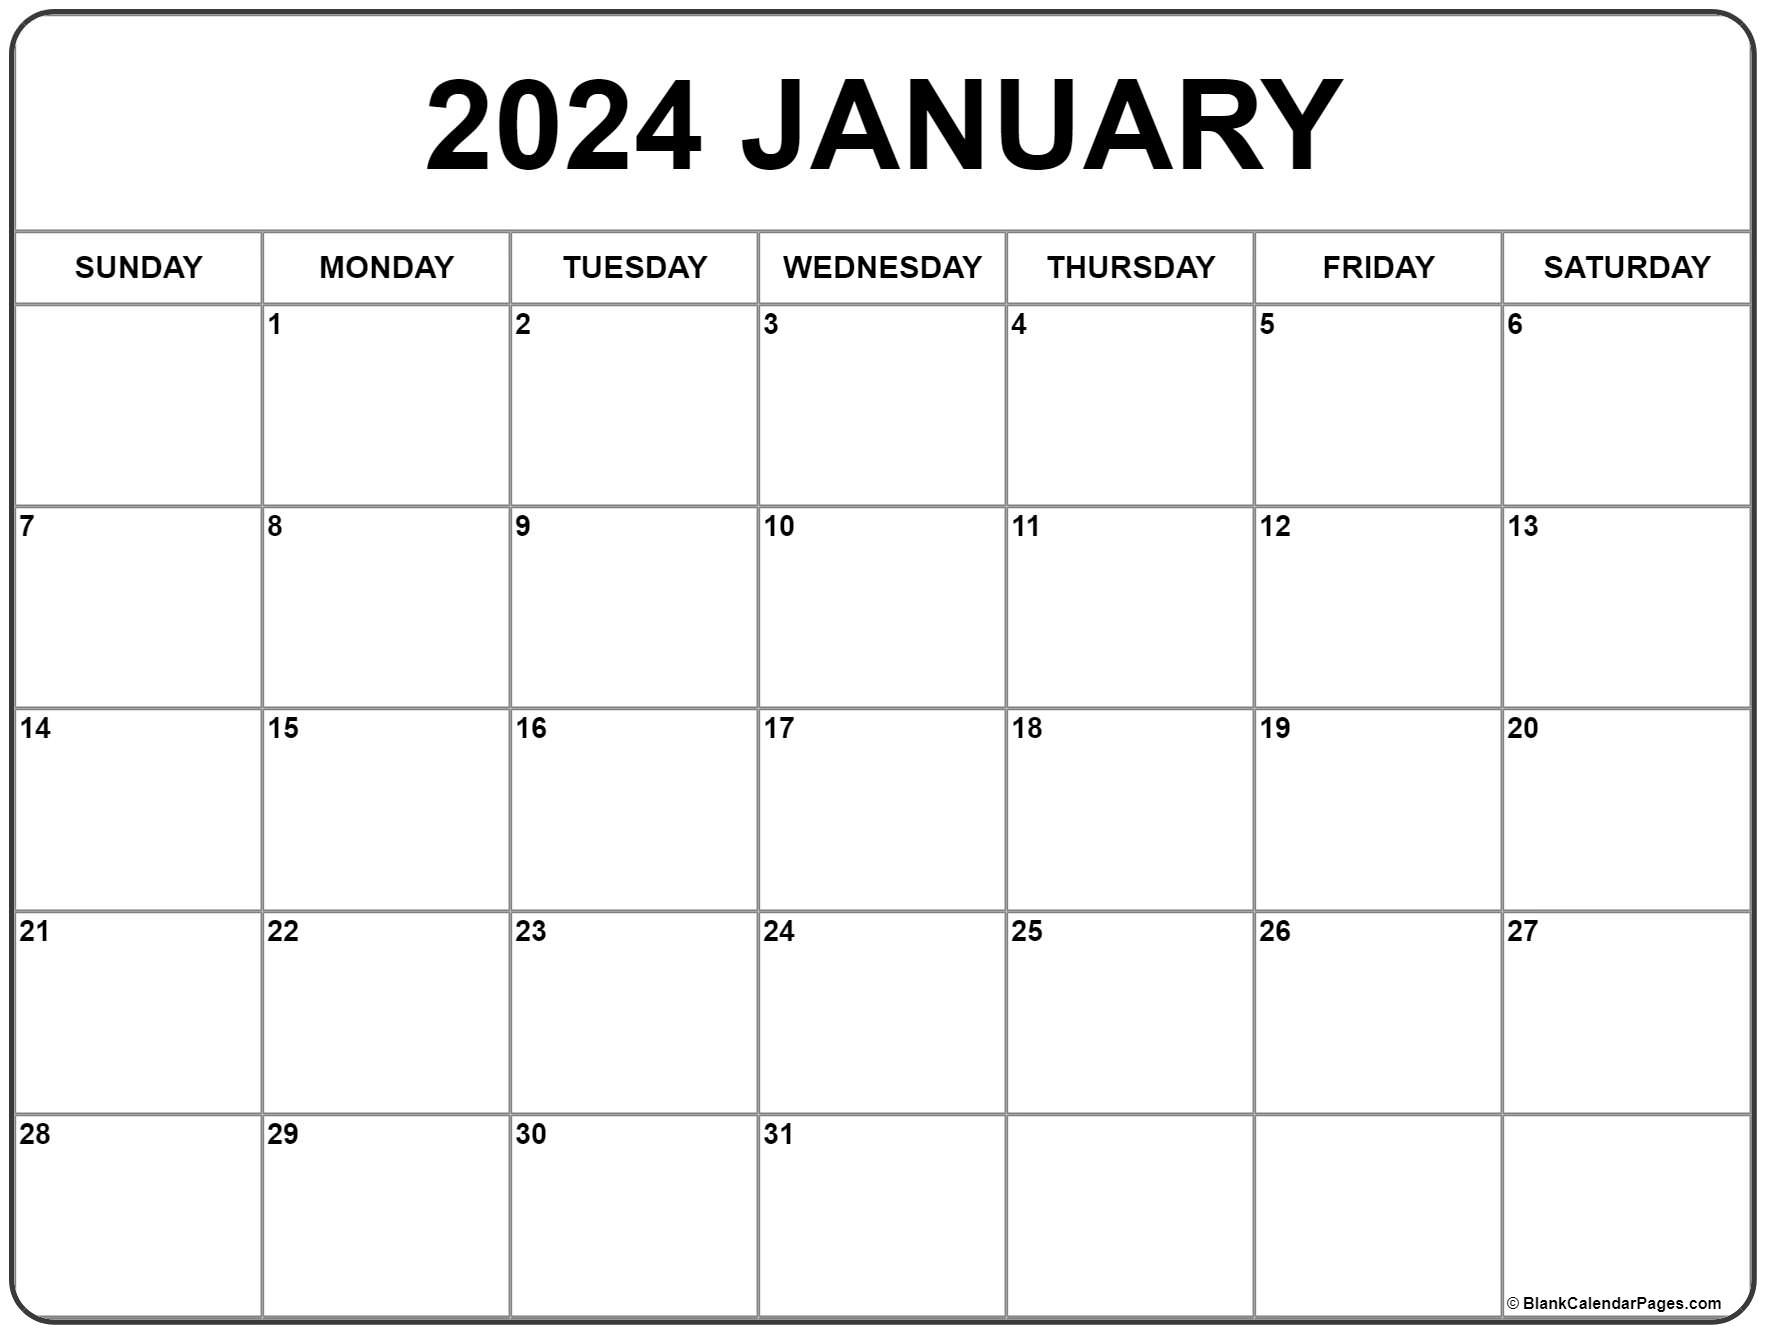 January 2024 Calendar | Free Printable Calendar for Free-Printable-Calendar January 2024